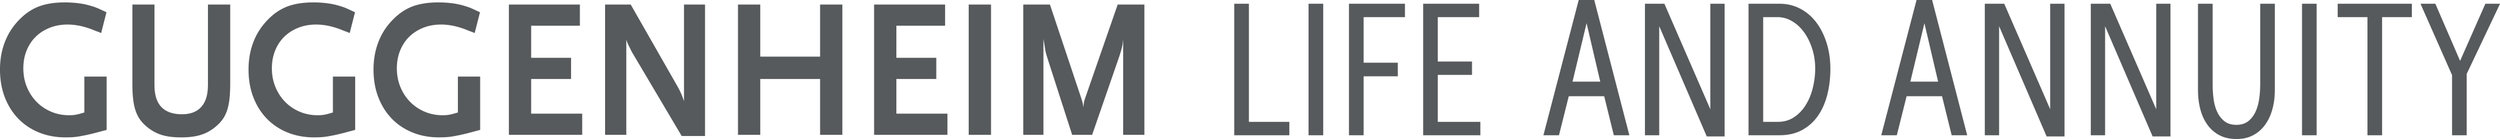 Guggenheim Logo.JPG